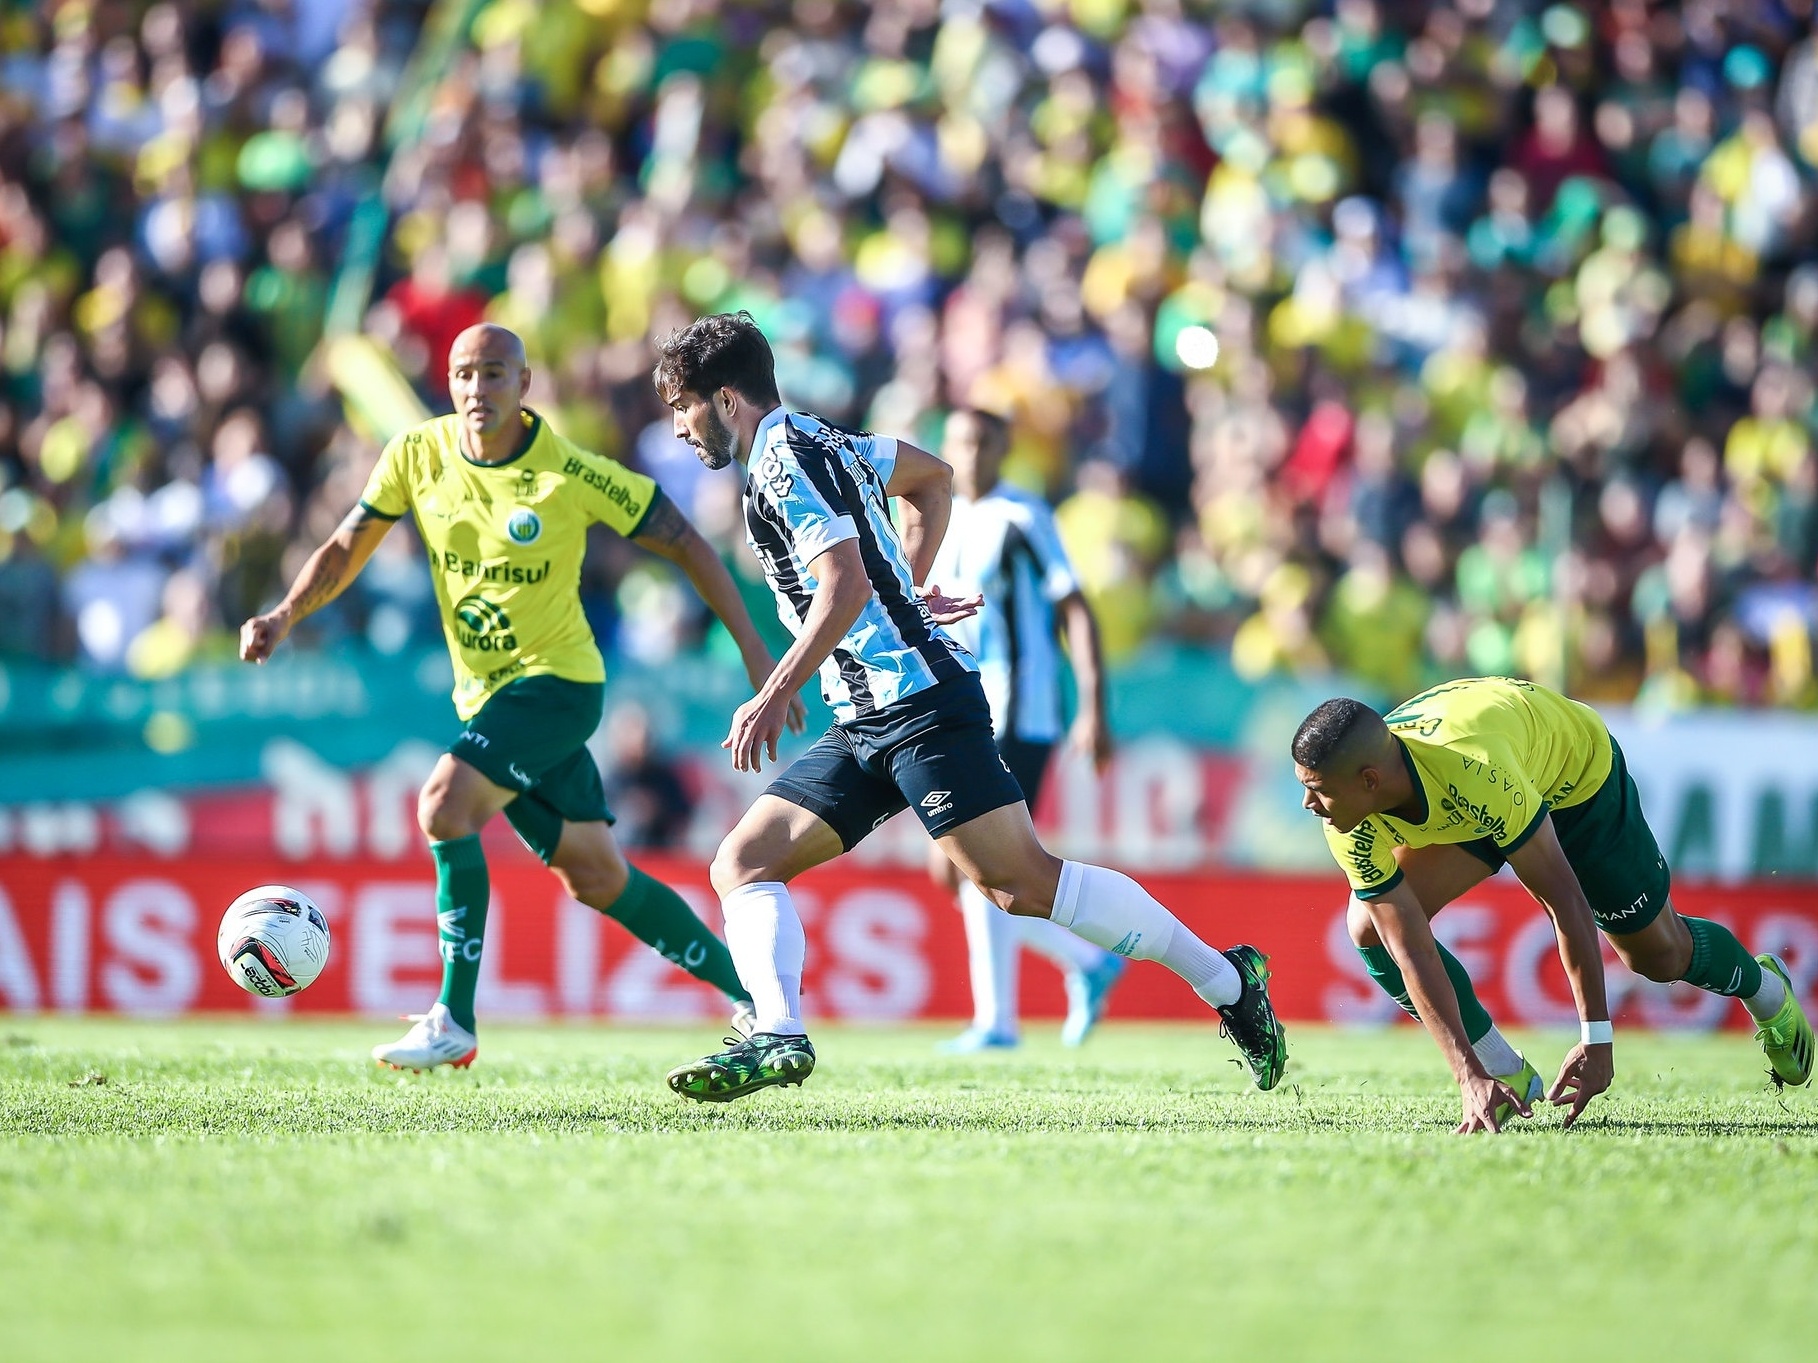 Ypiranga vs Grêmio: Serviço de jogo - Ypiranga Futebol Clube